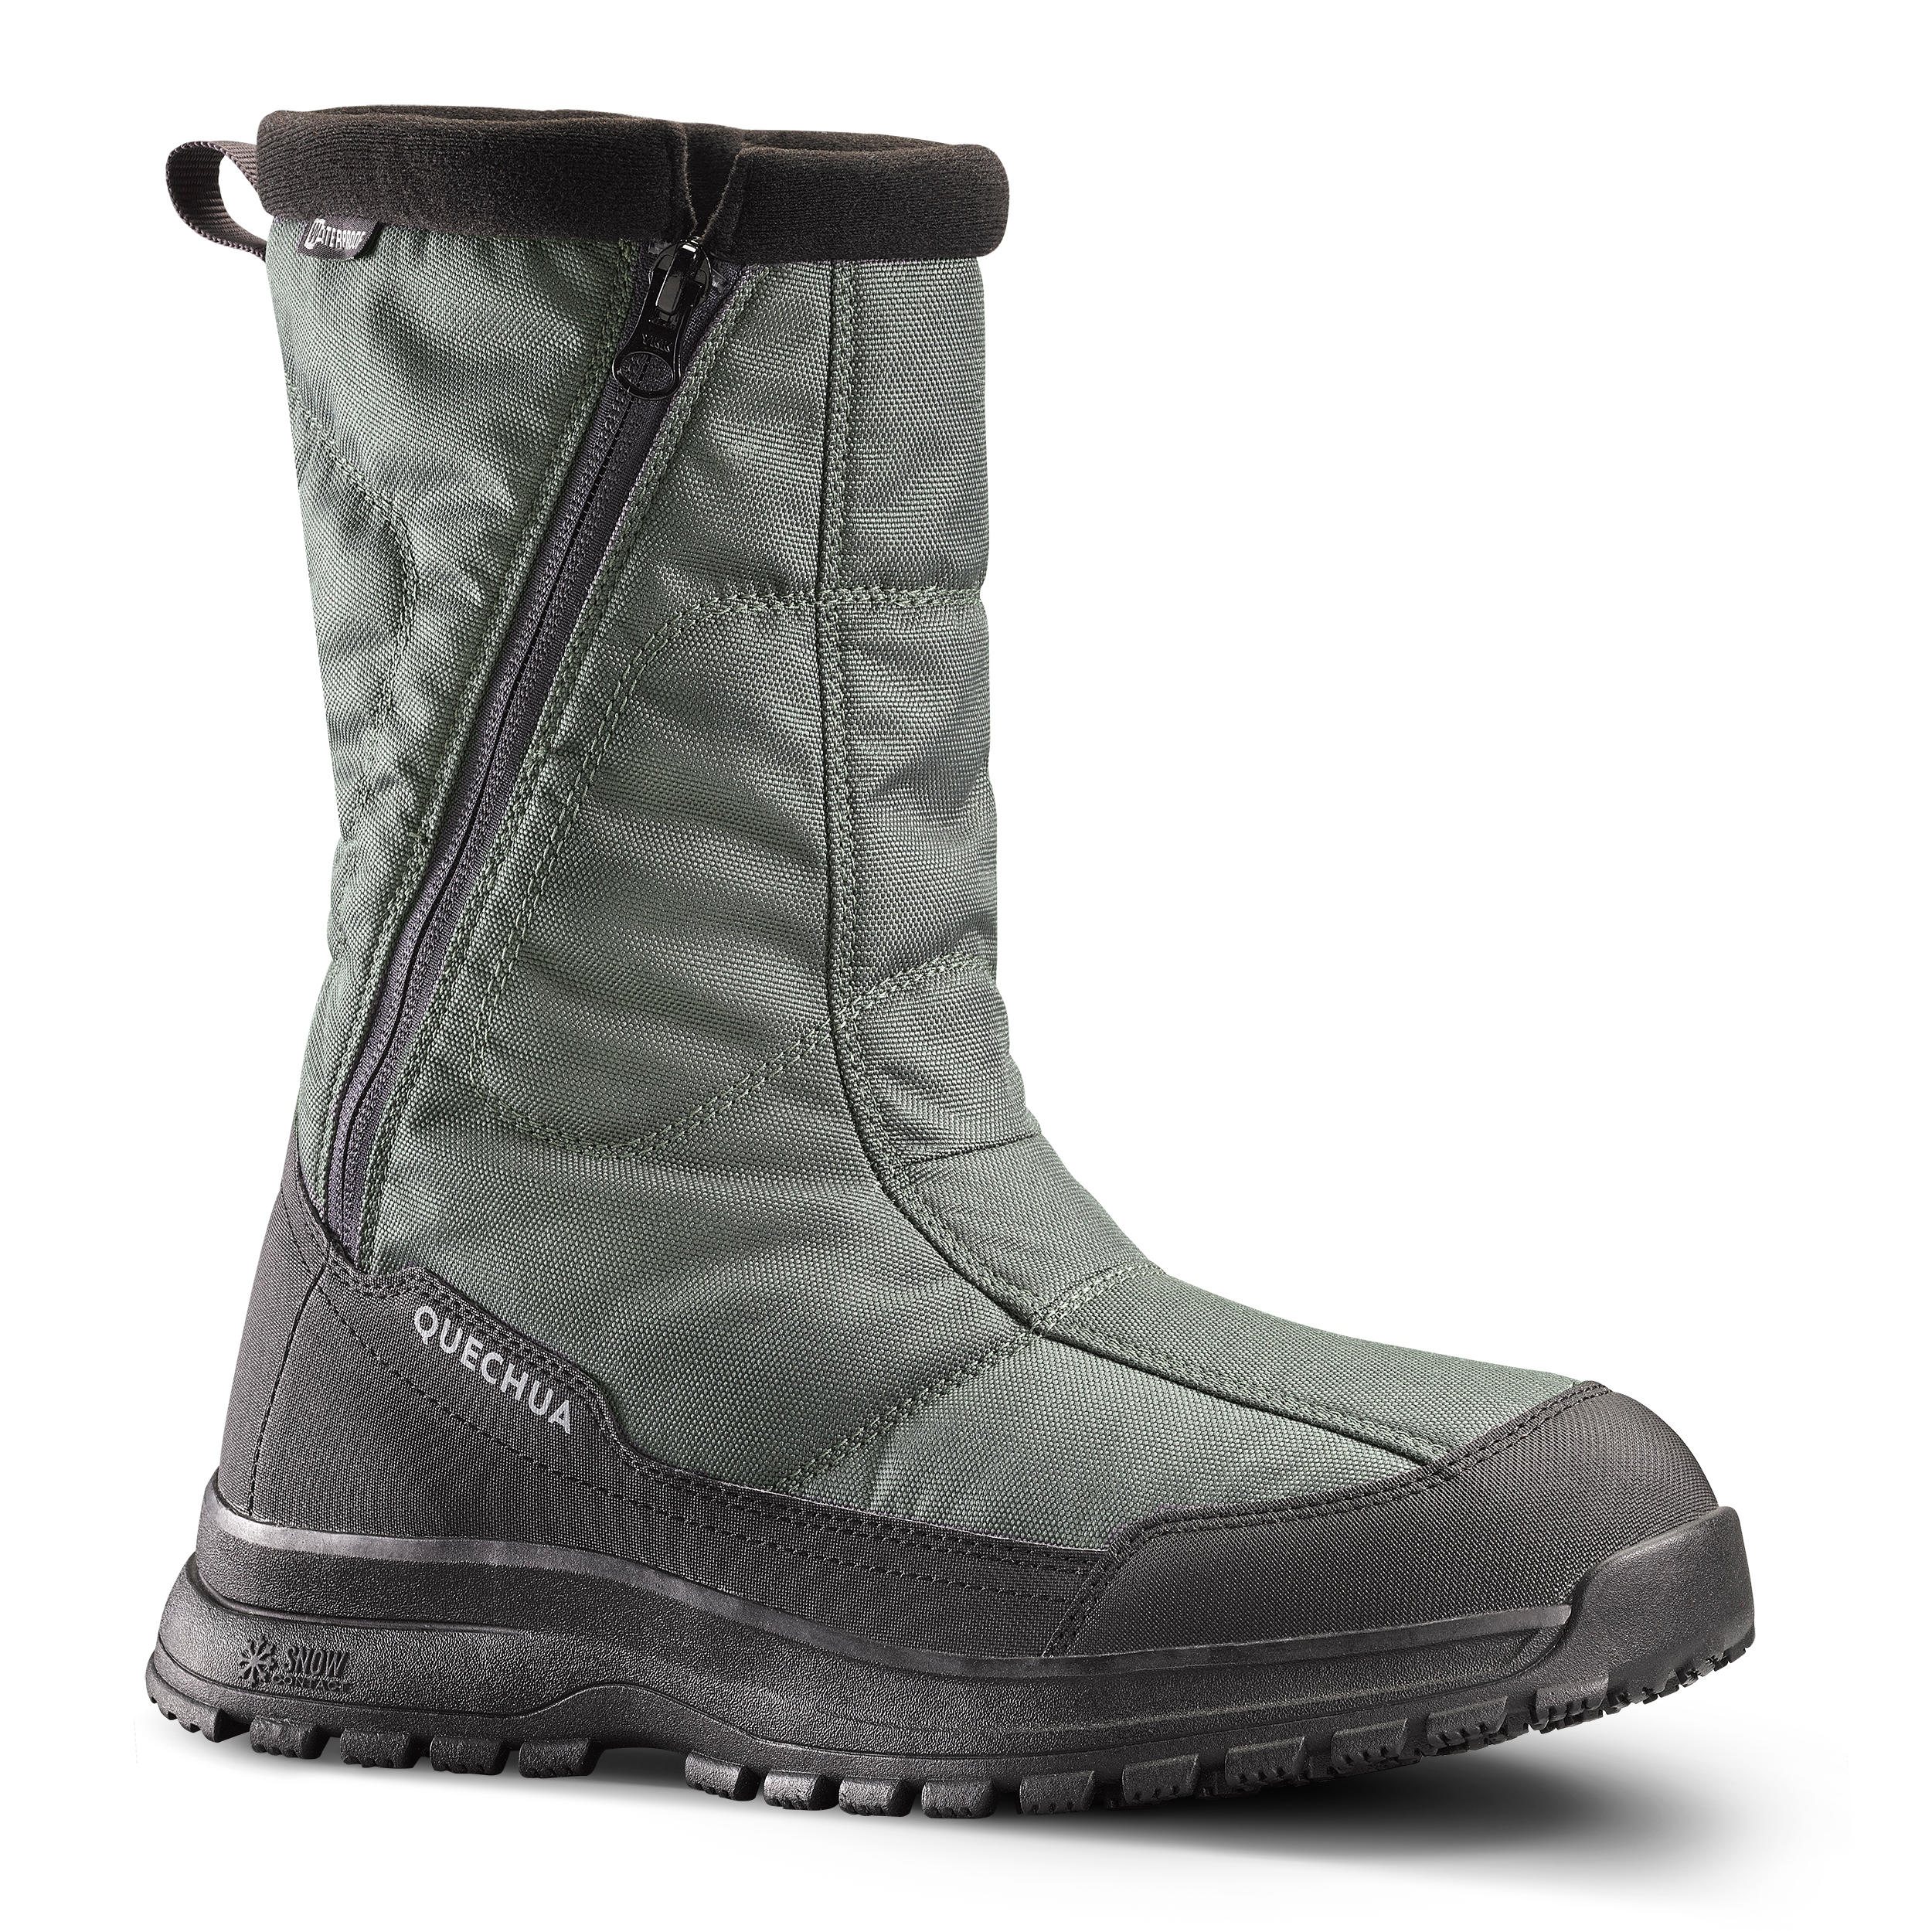 mens warm waterproof winter boots